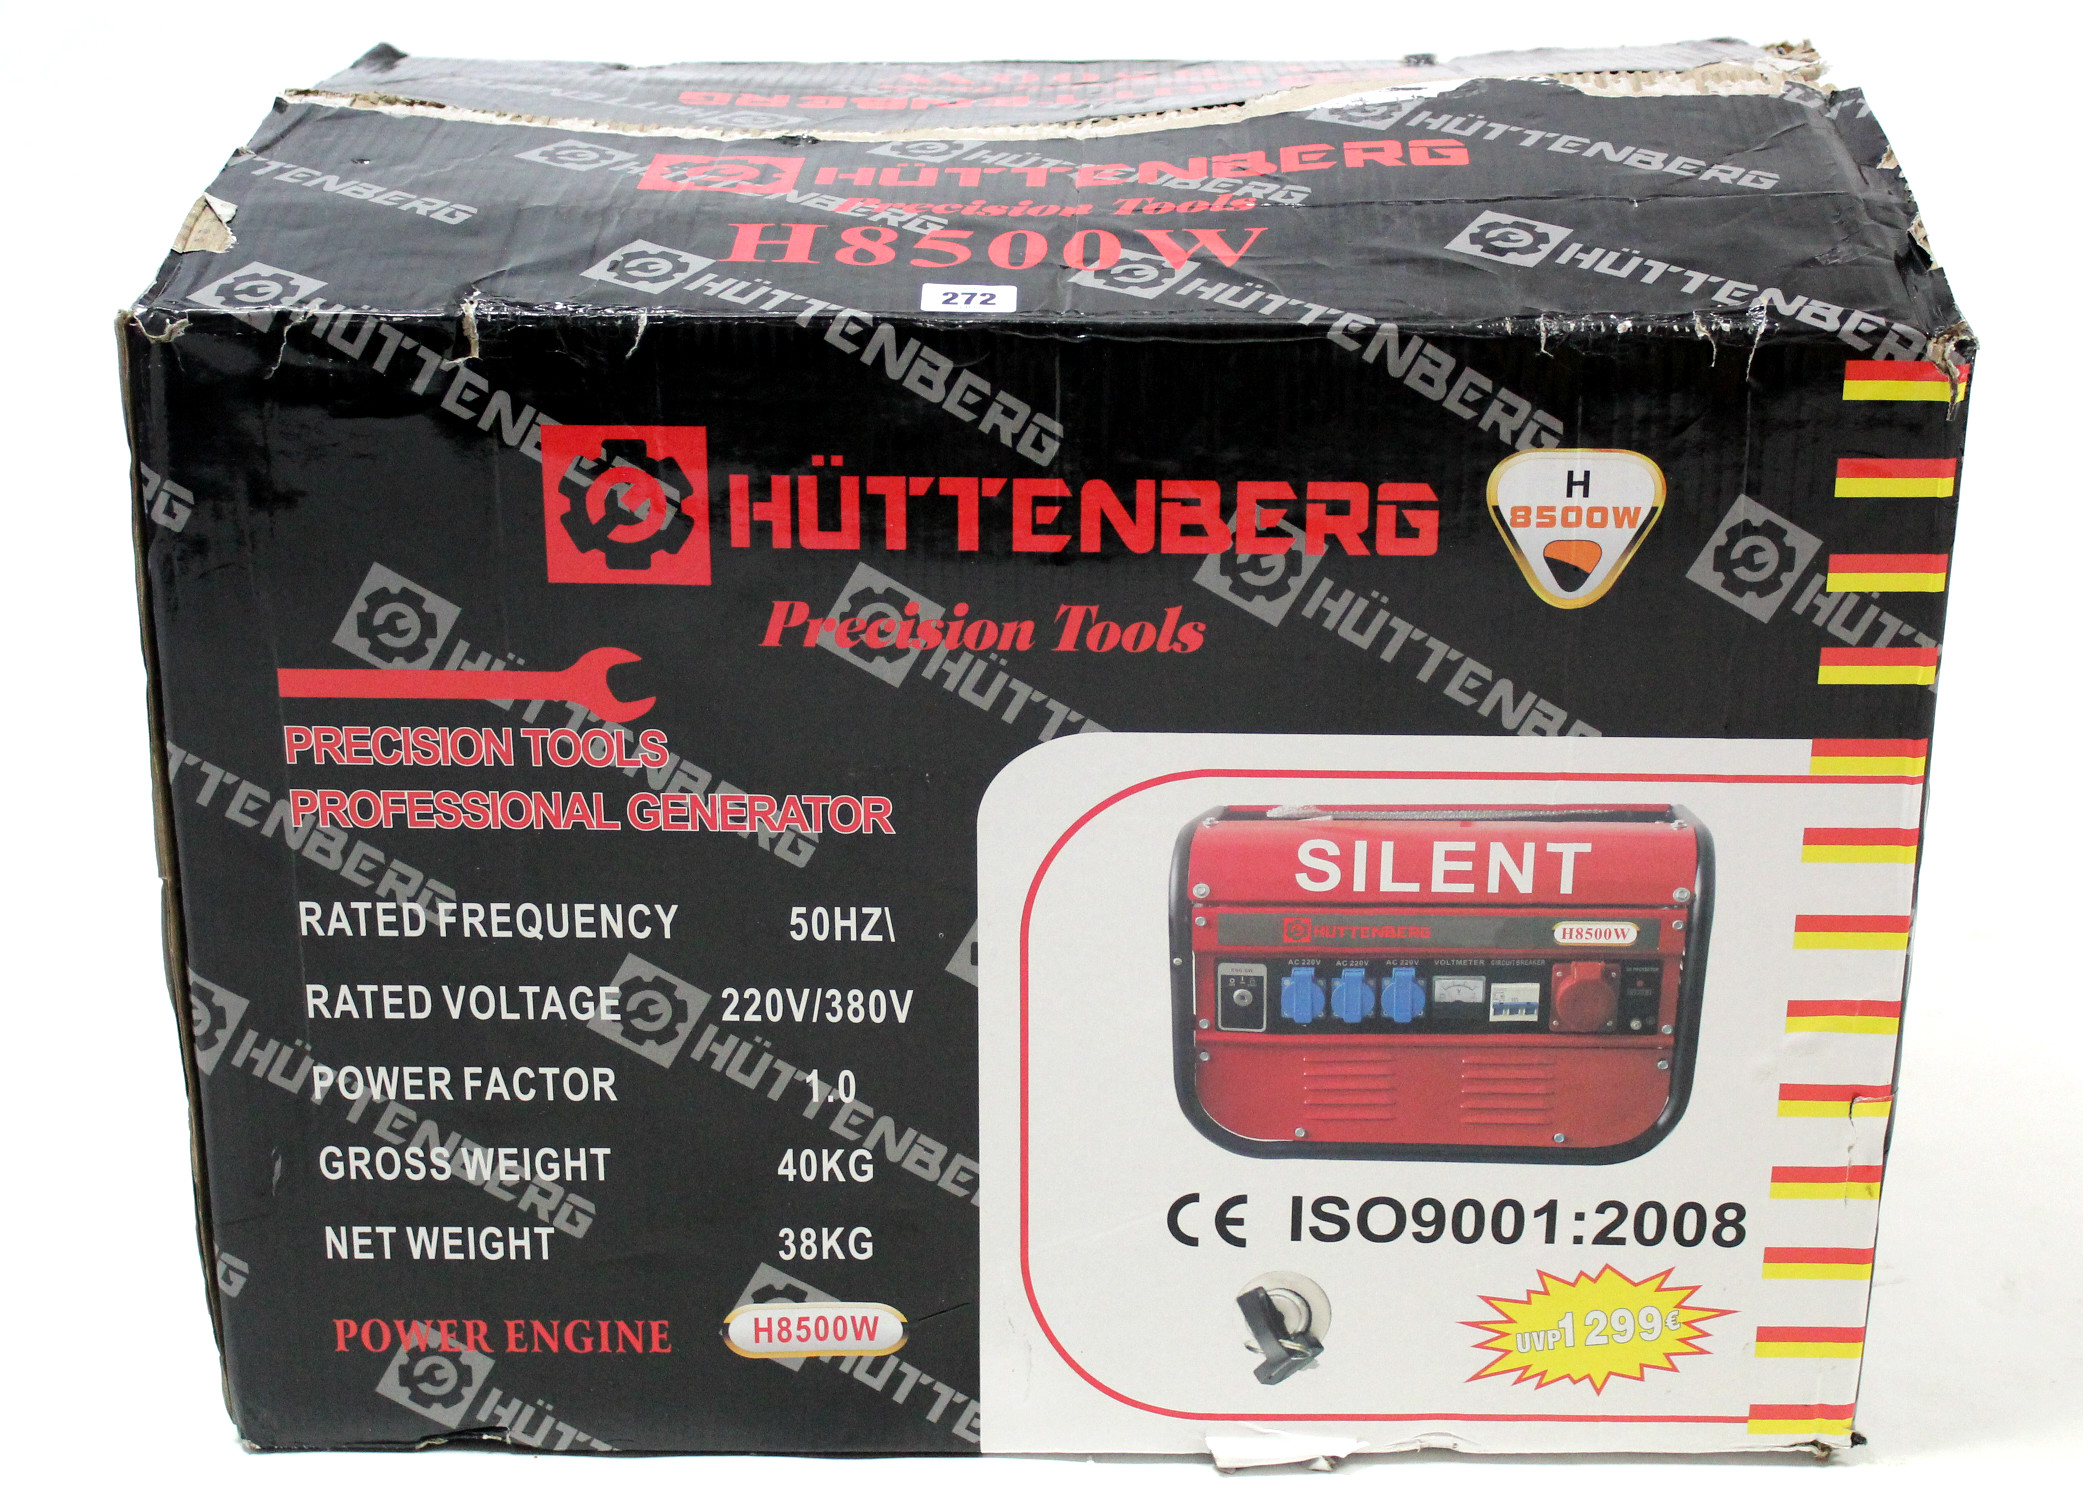 A Huttenberg “H8500W” portable generator, boxed.